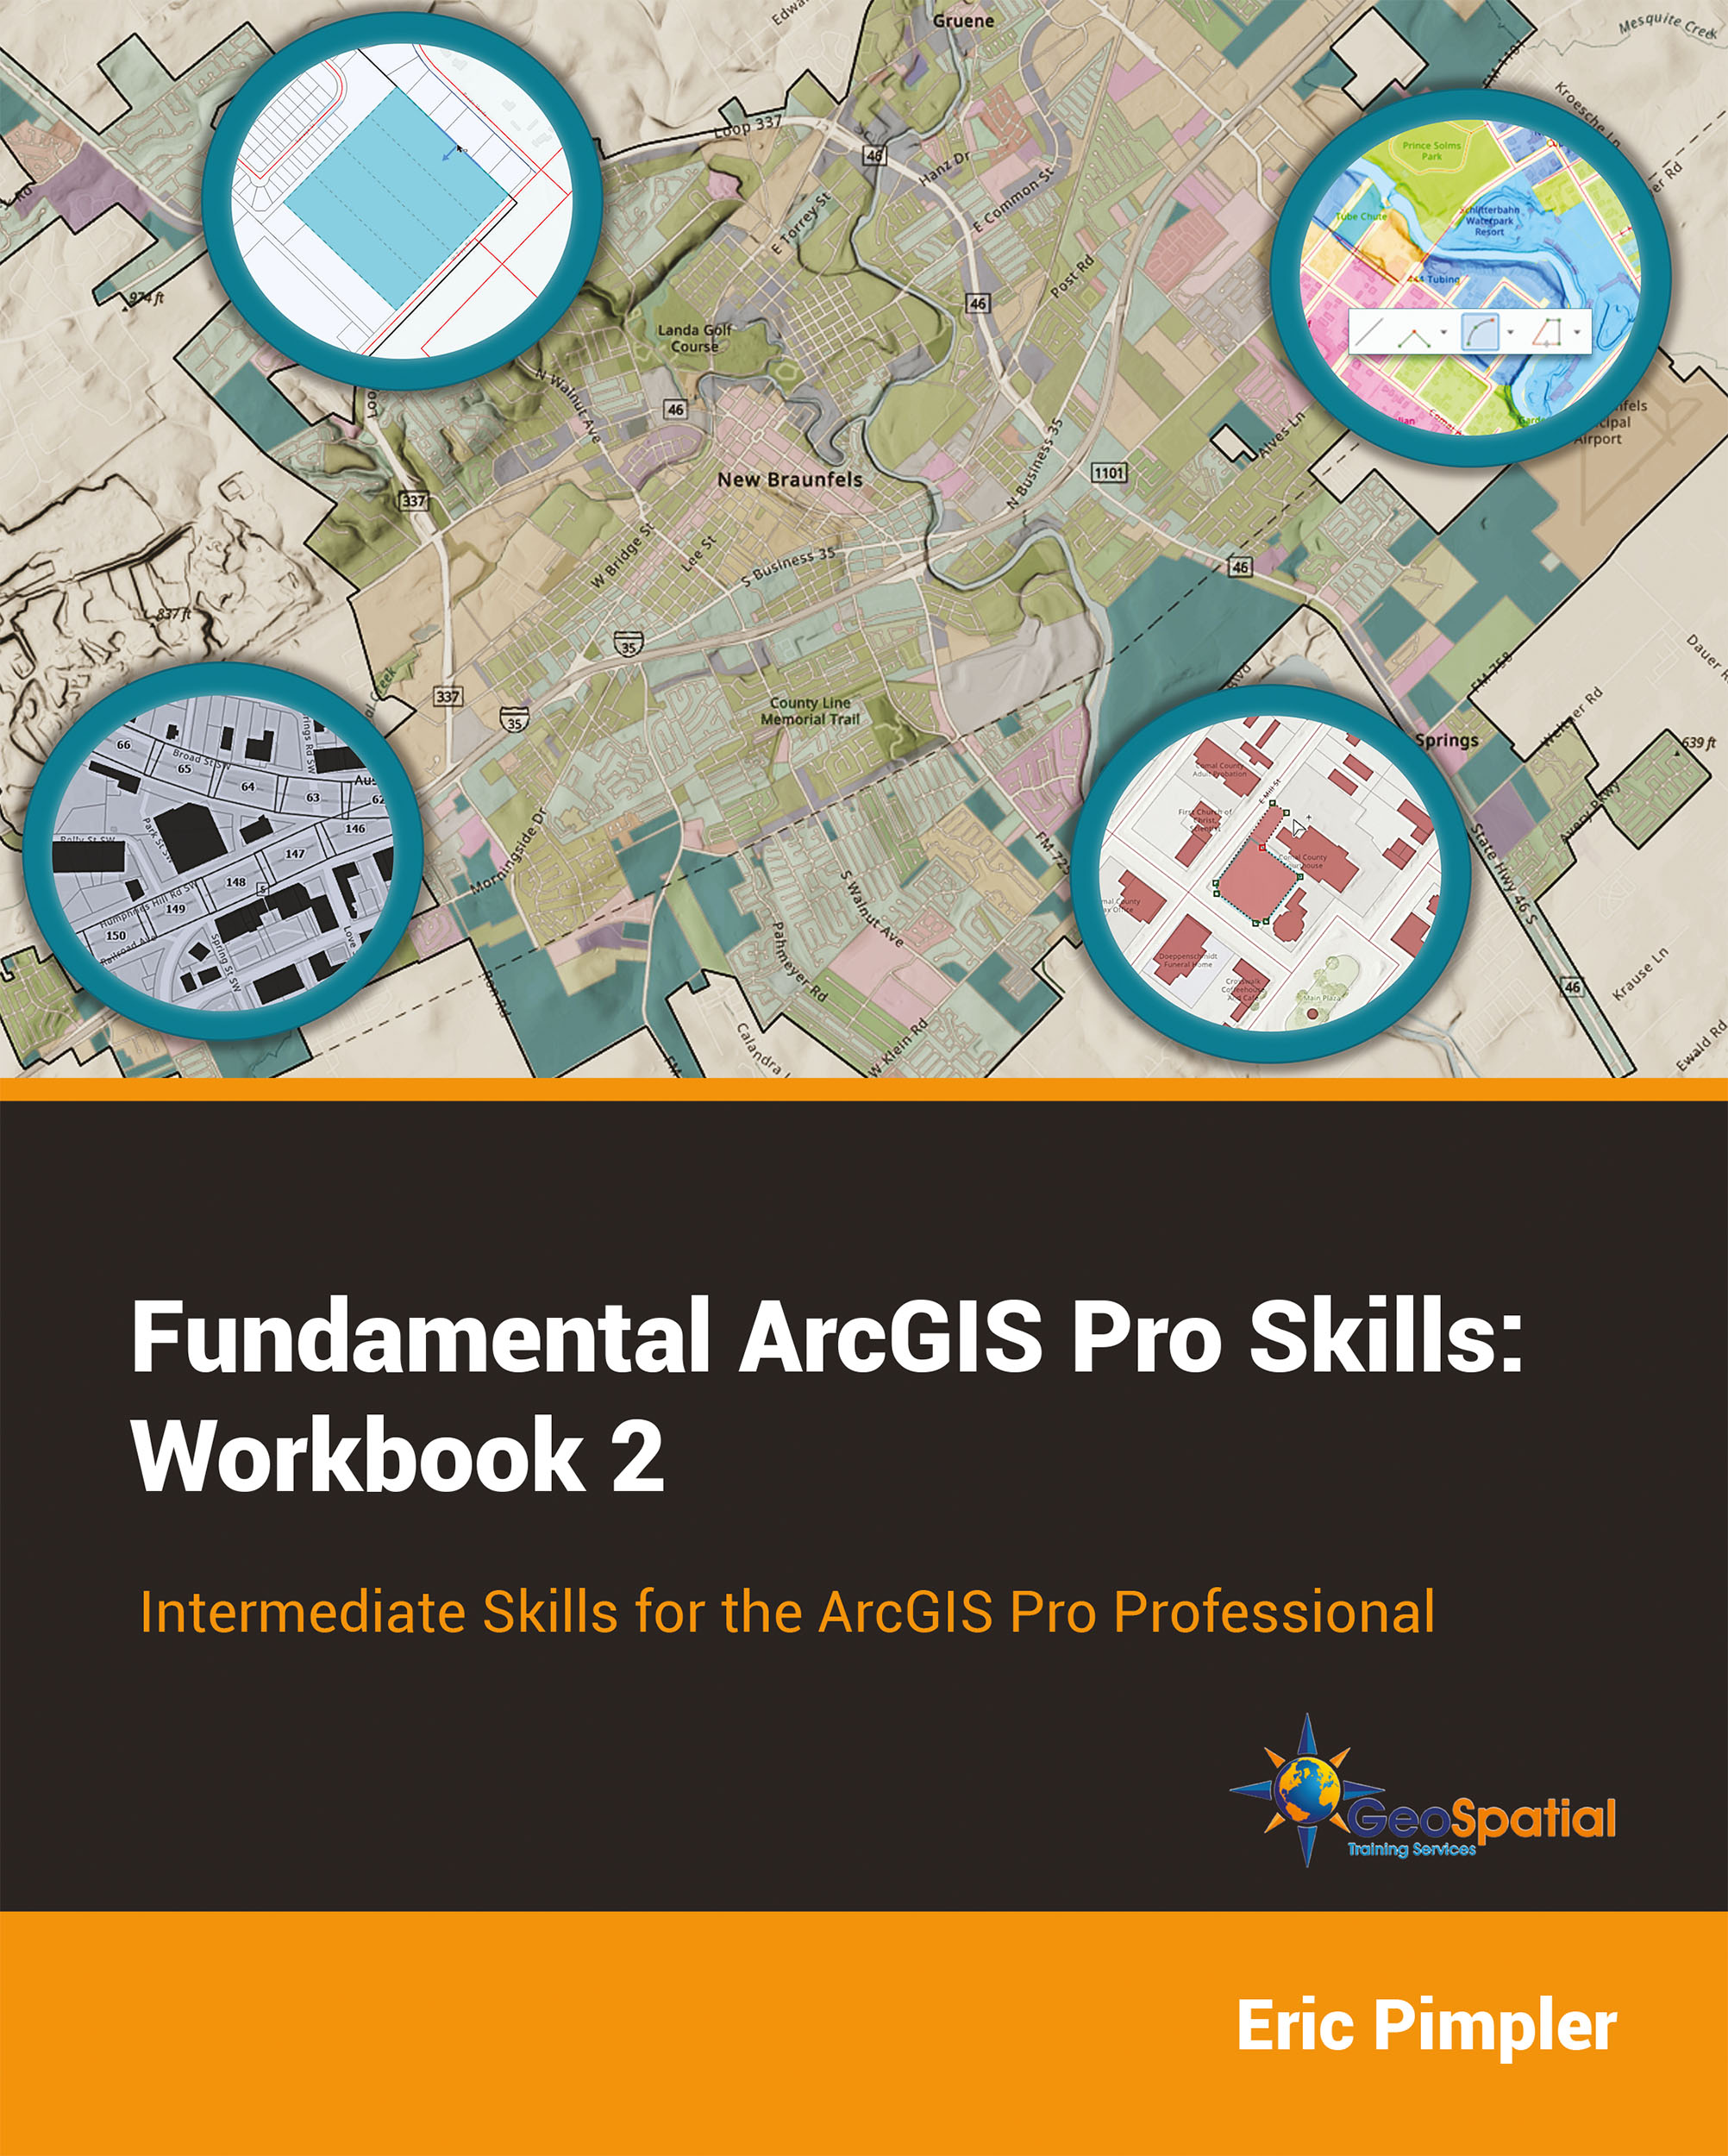 Our New Book – Fundamental ArcGIS Pro Skills: Workbook 2